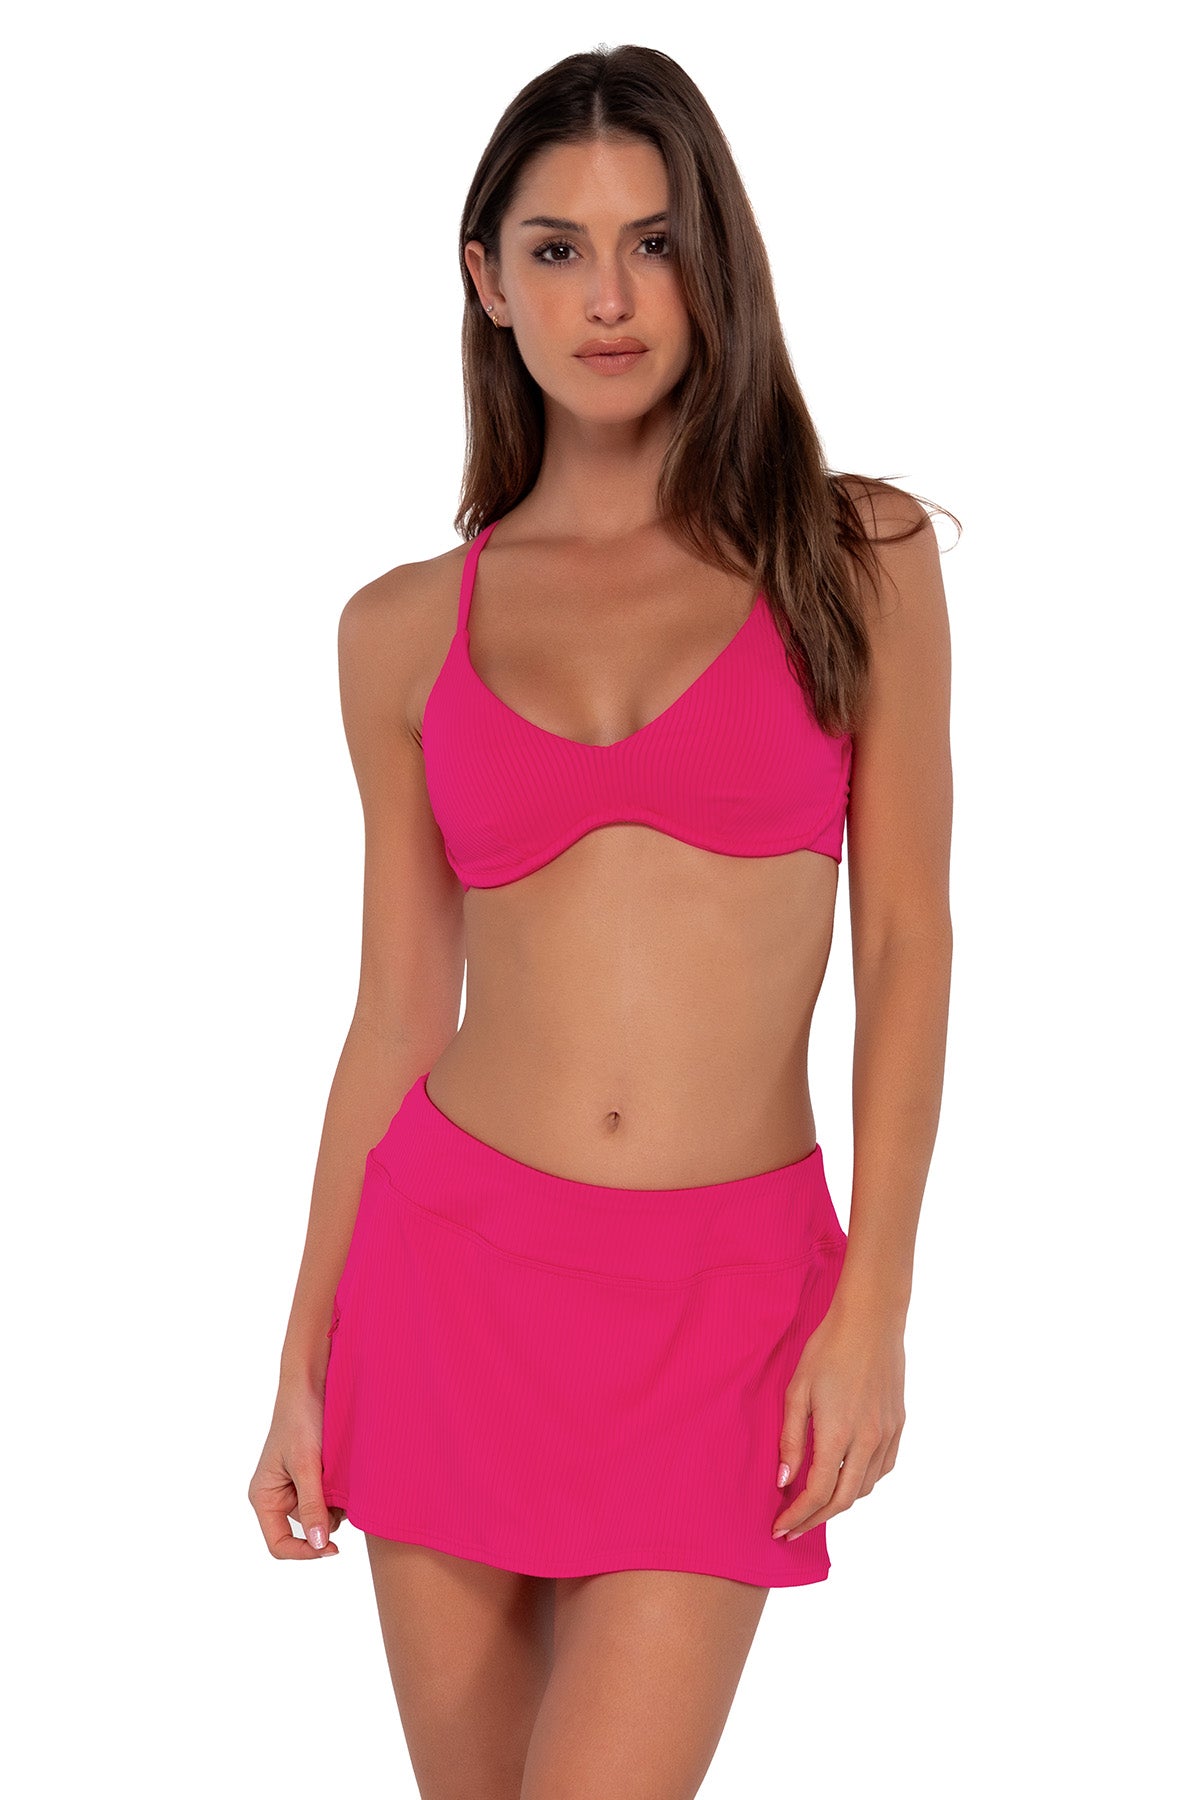 Front pose #1 of Gigi wearing Sunsets Begonia Sandbar Rib Sporty Swim Skirt paired with Brooke U-Wire bikini top